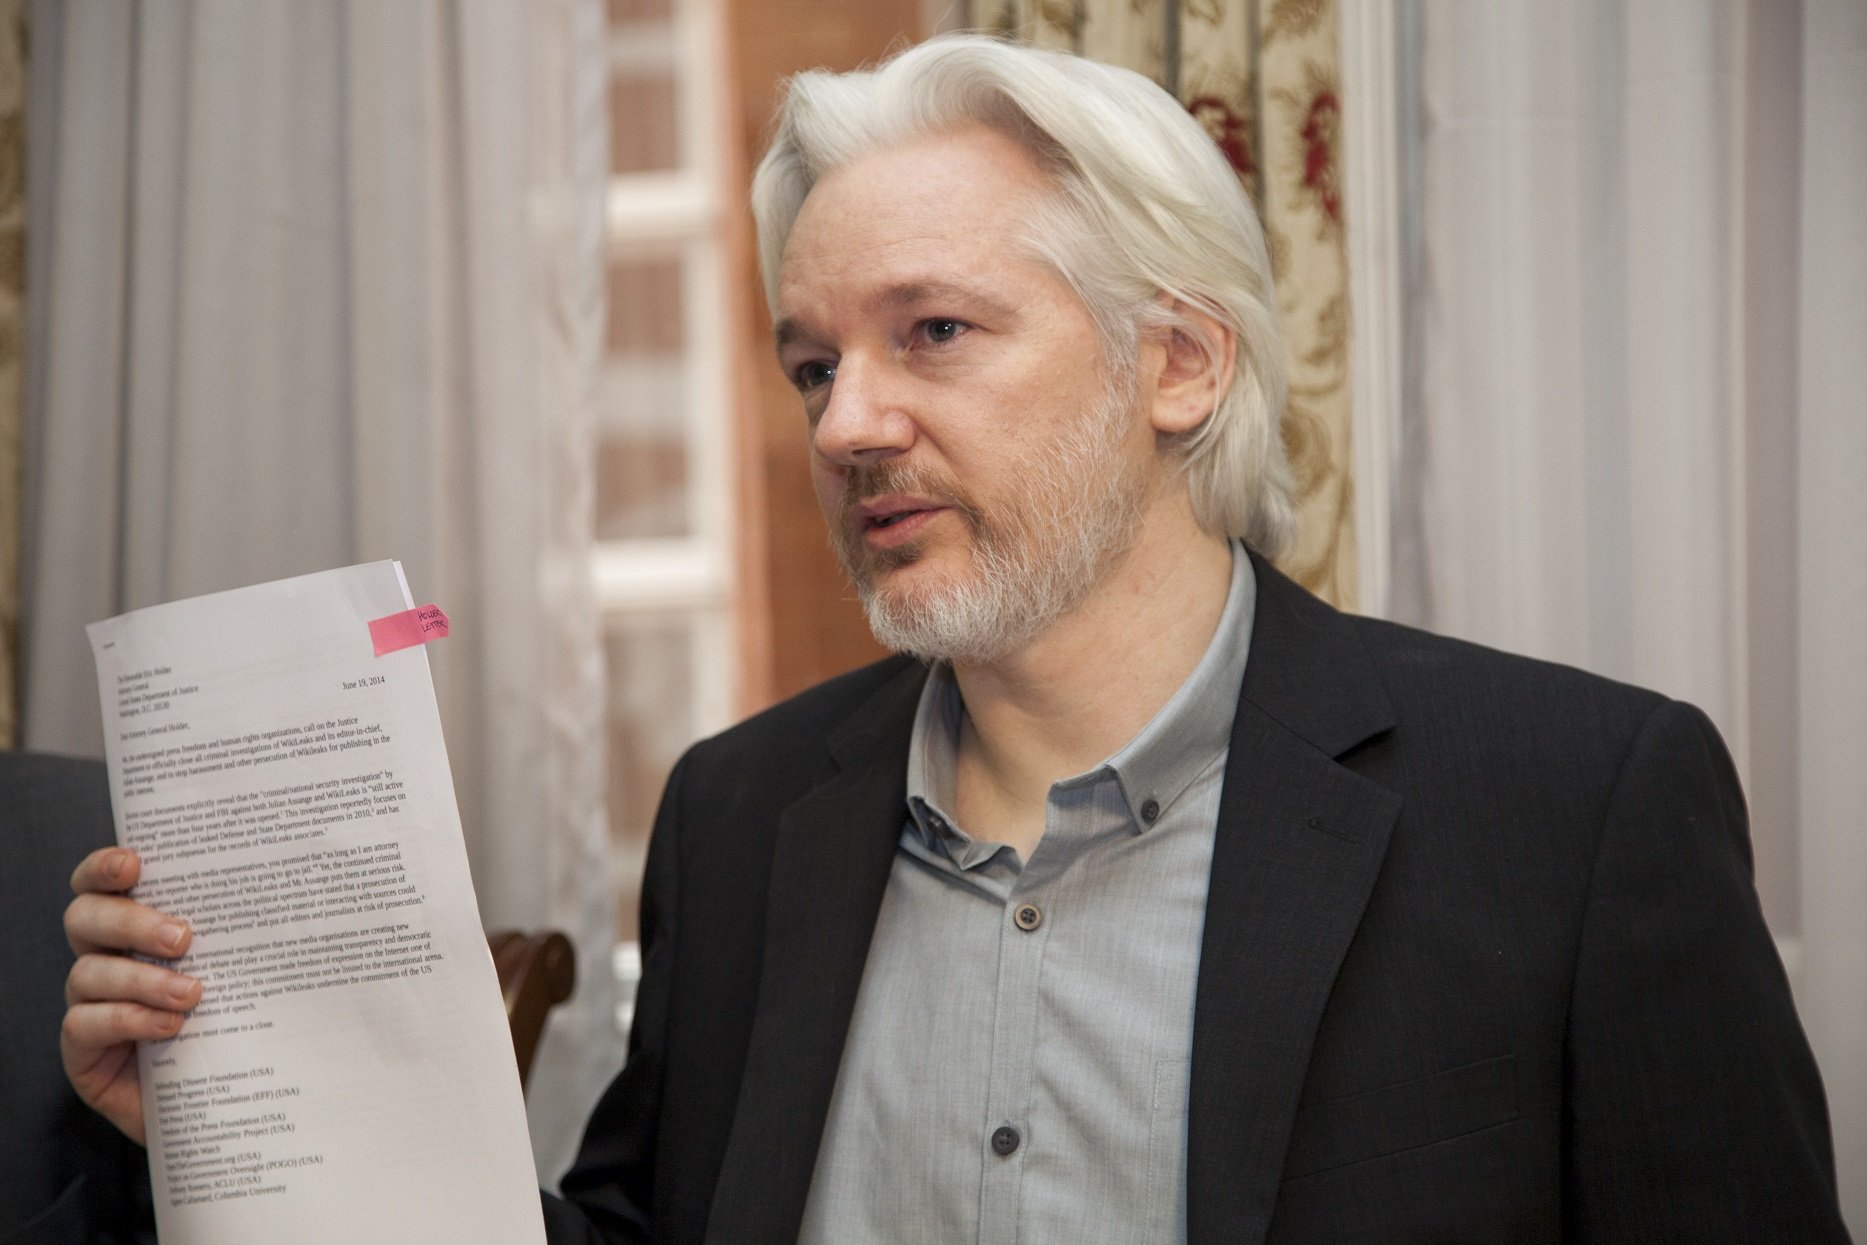 El escritor Pérez-Reverte insulta a Assange por apoyar el referéndum